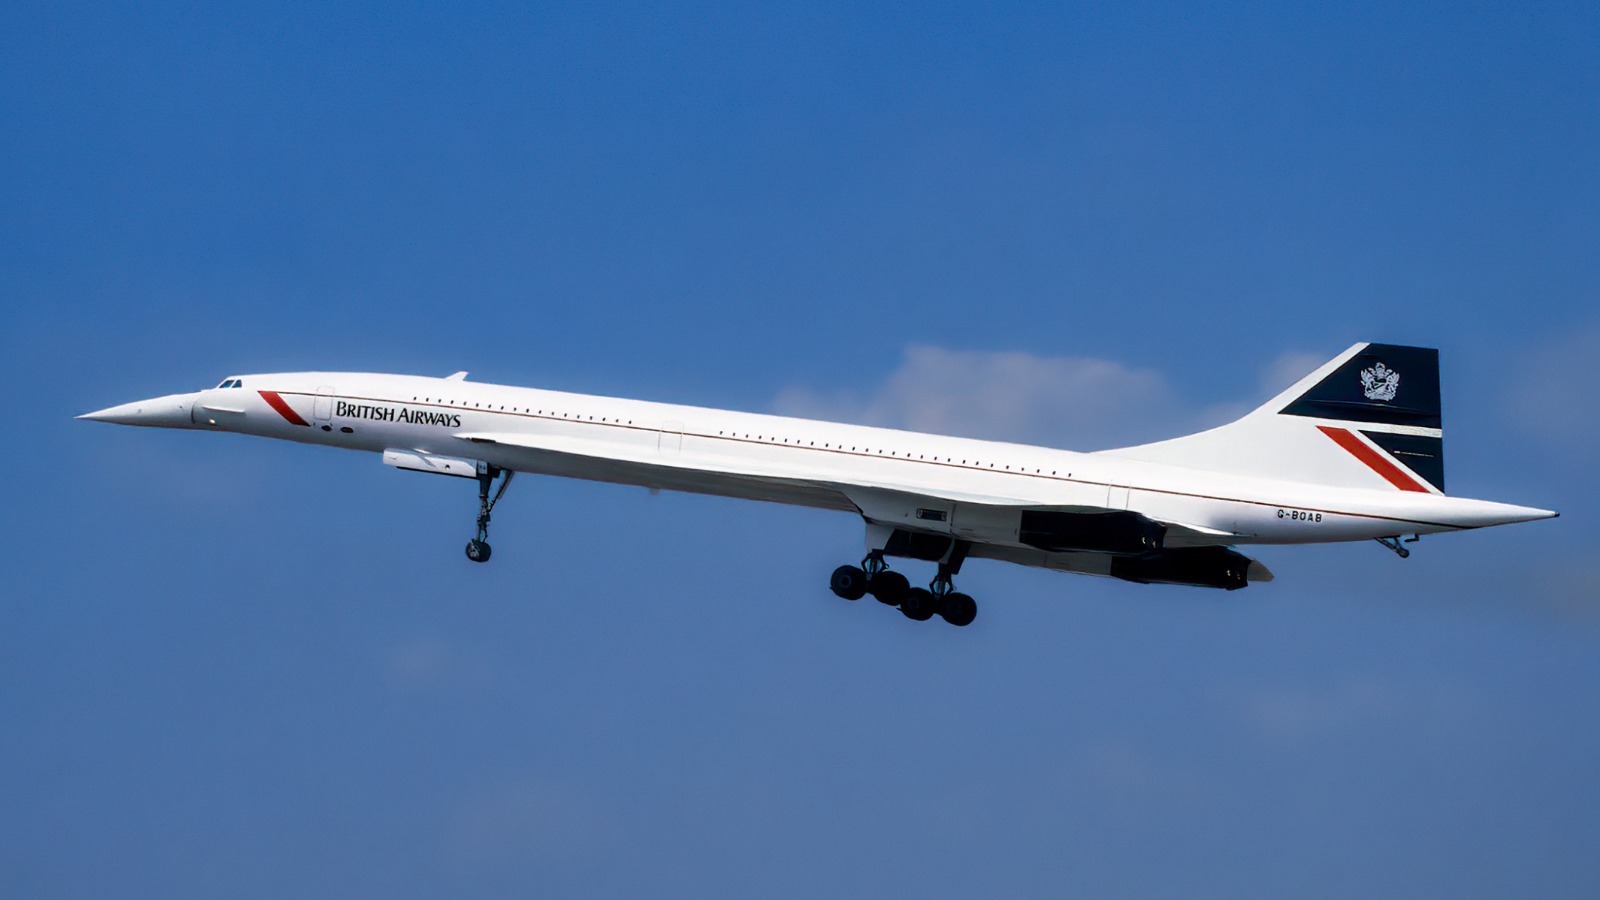 Concorde crash: 23 years ago on July 25 Concorde crashed killing